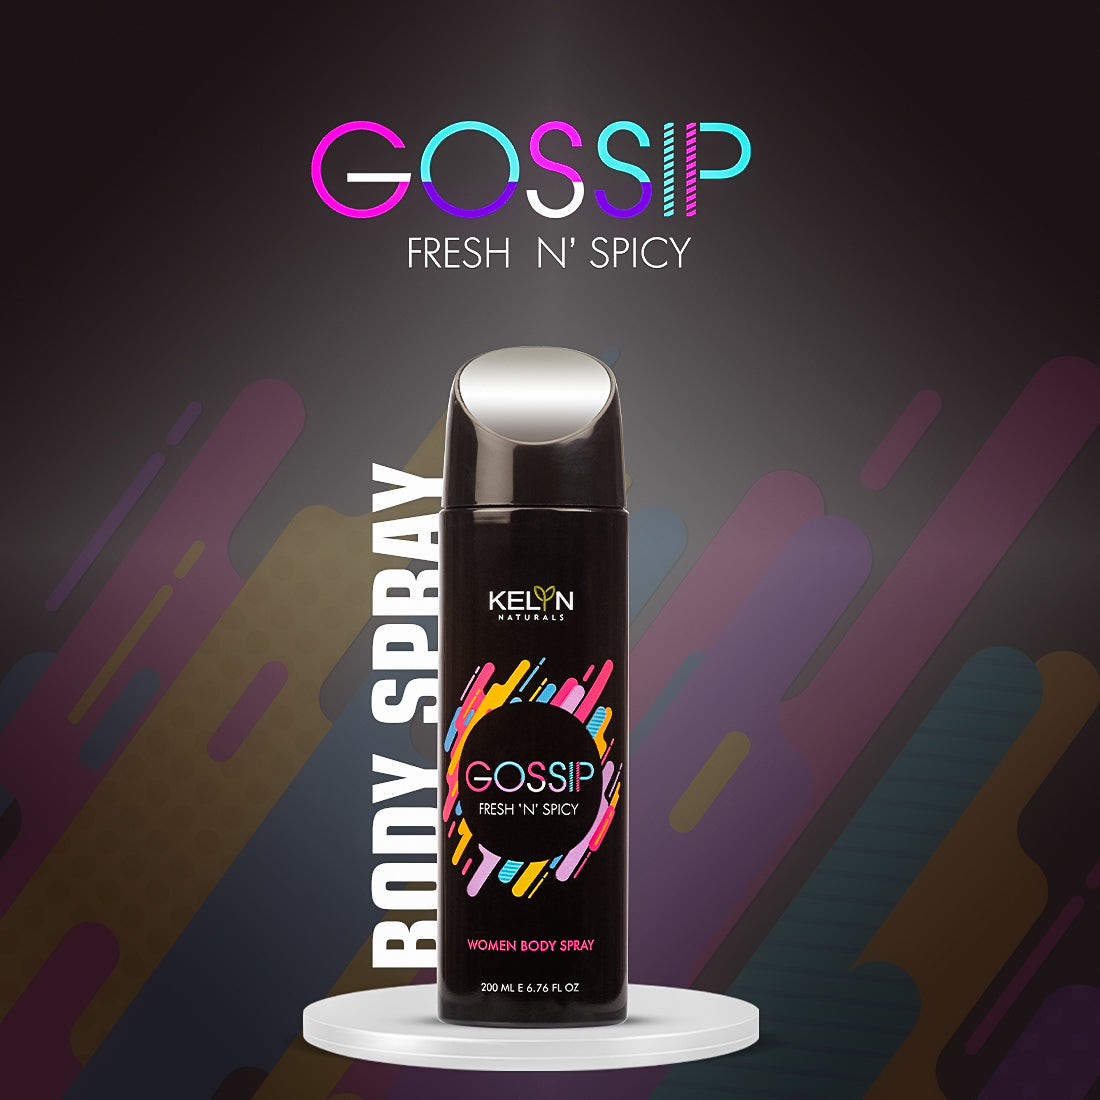 Gossip, Scoop Deodorant for Women Body Spray (Pack of 2) 200 ml each